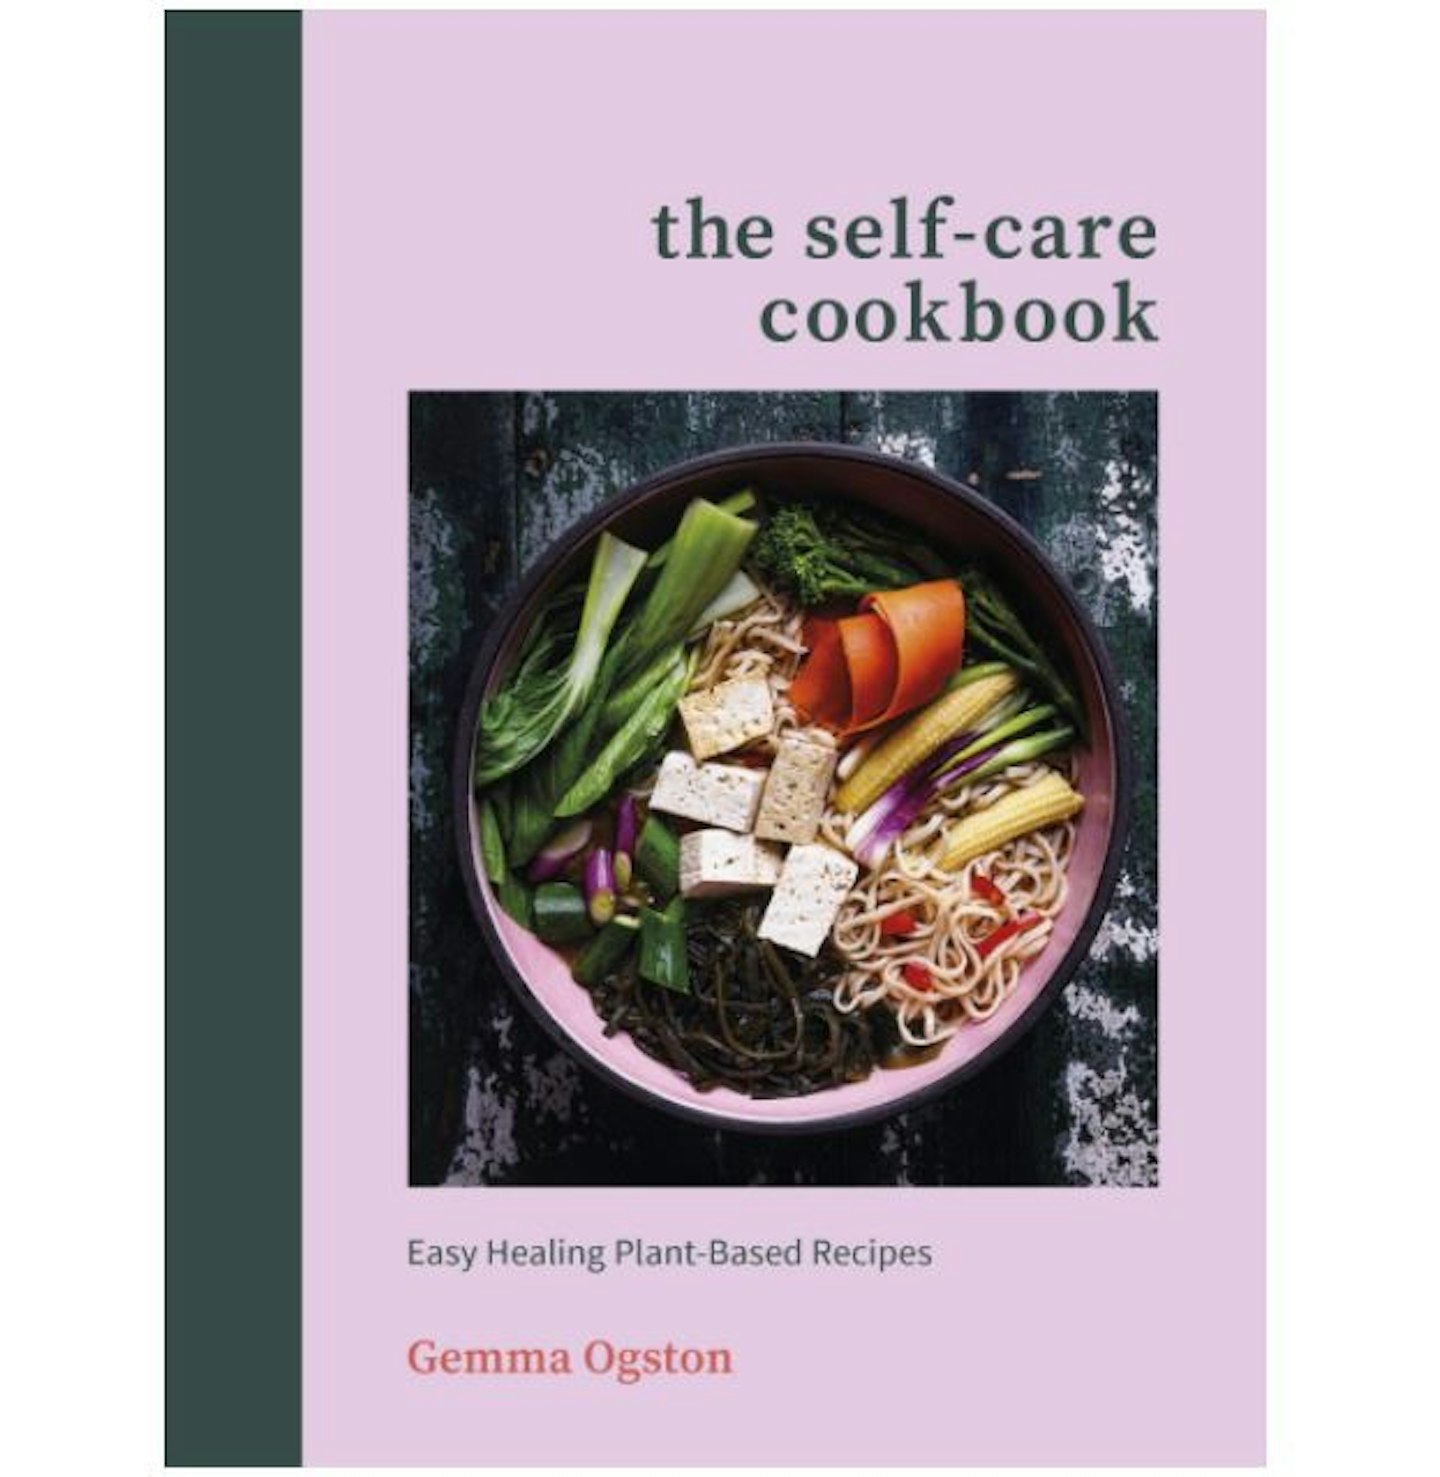 The Self-Care Cookbook by Gemma Ogston